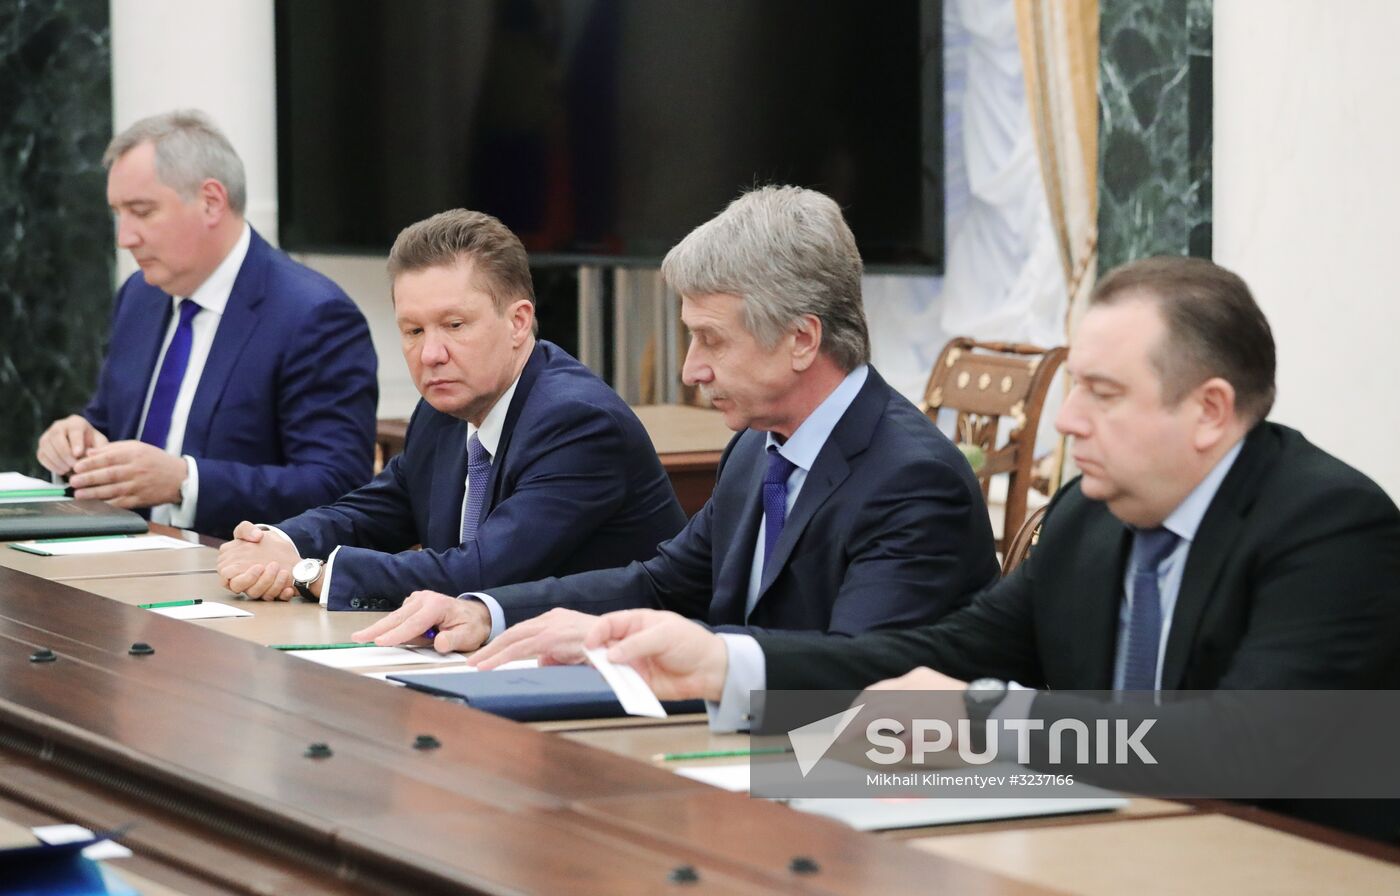 President Putin chairs meeting on Zvezda Shipyard development